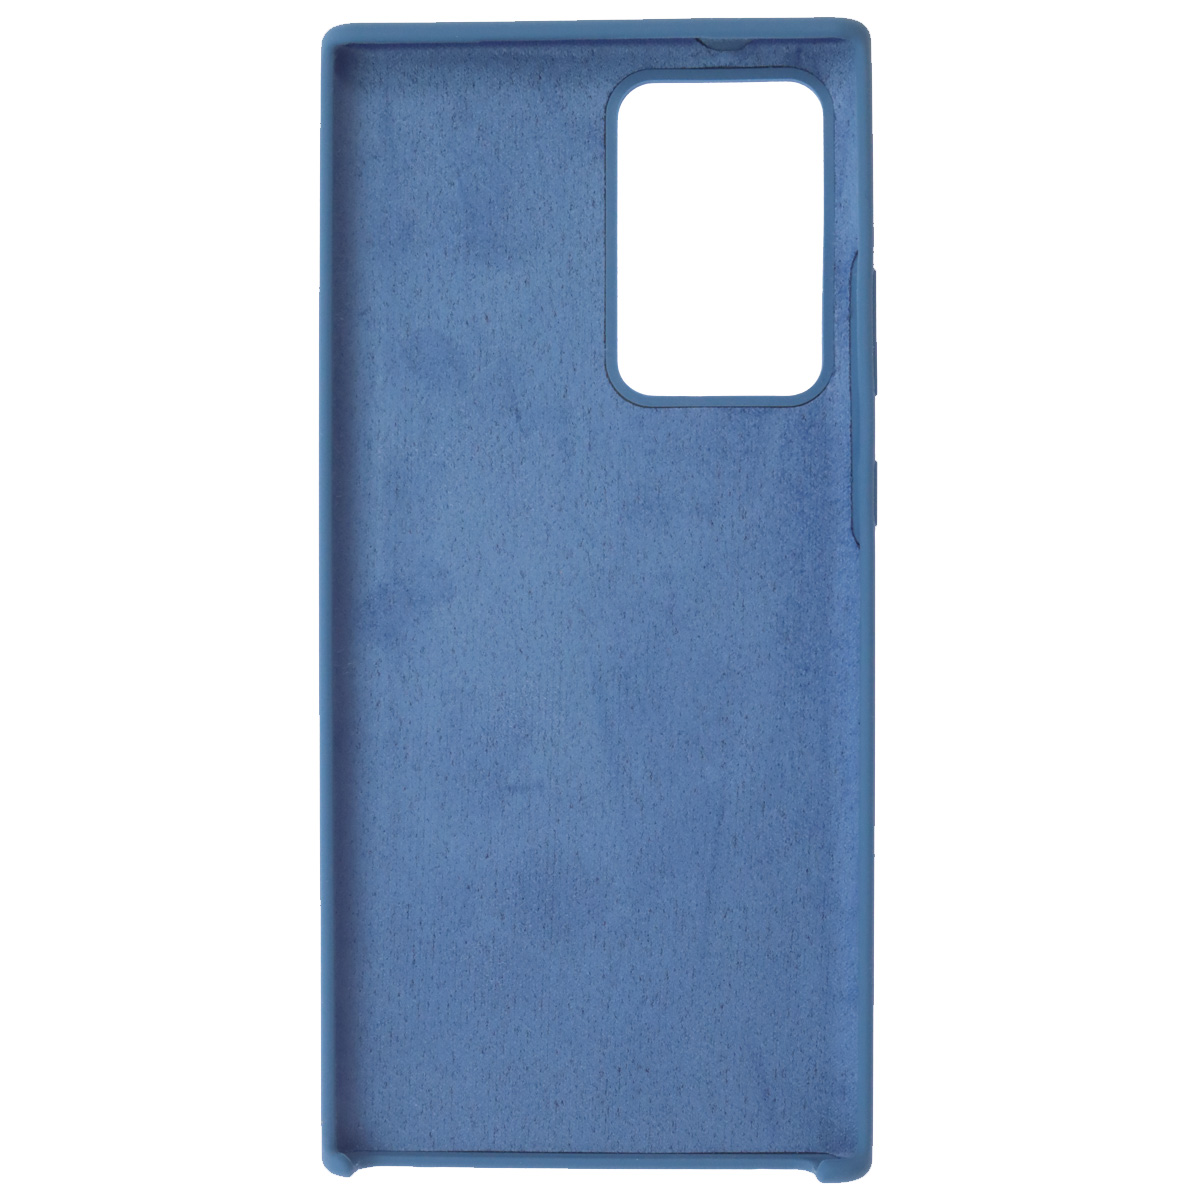 Чехол накладка Silicon Cover для SAMSUNG Galaxy Note 20 Ultra (SM-N9860), силикон, бархат, цвет синий